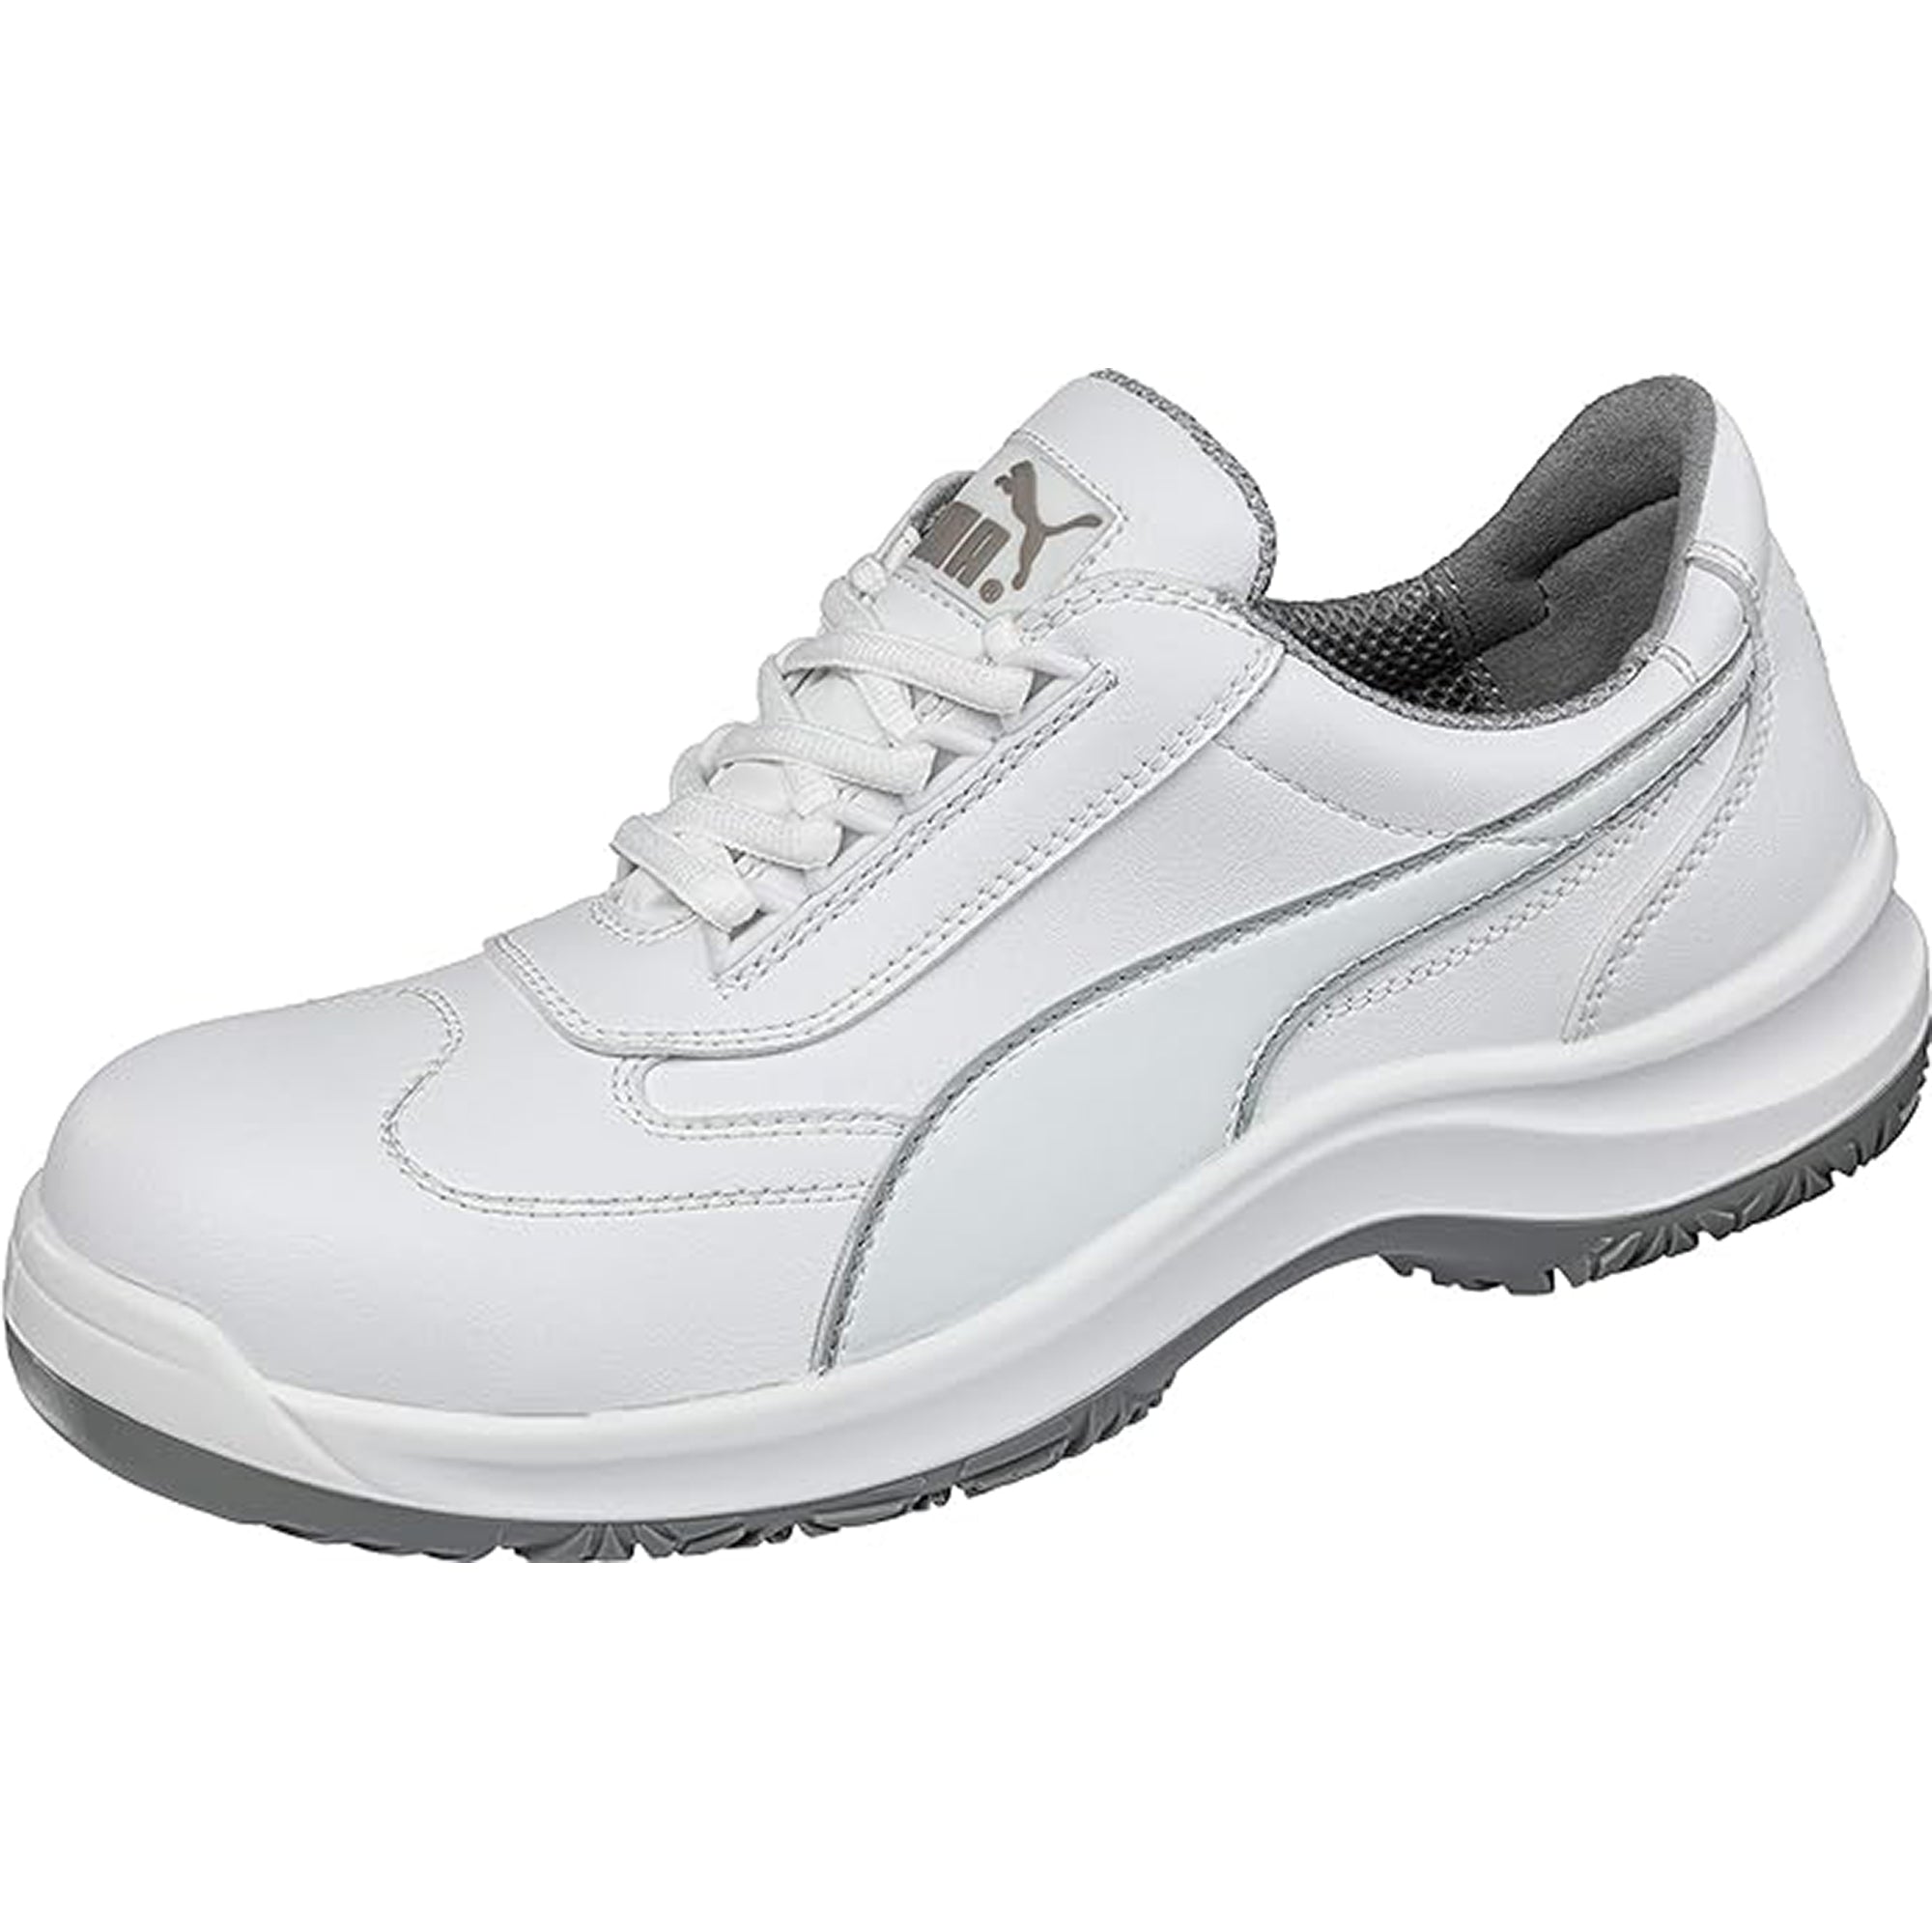 Puma Clarity Low S2 SRC Toe Cap Vegan White DGUV  Safety work boots shoes